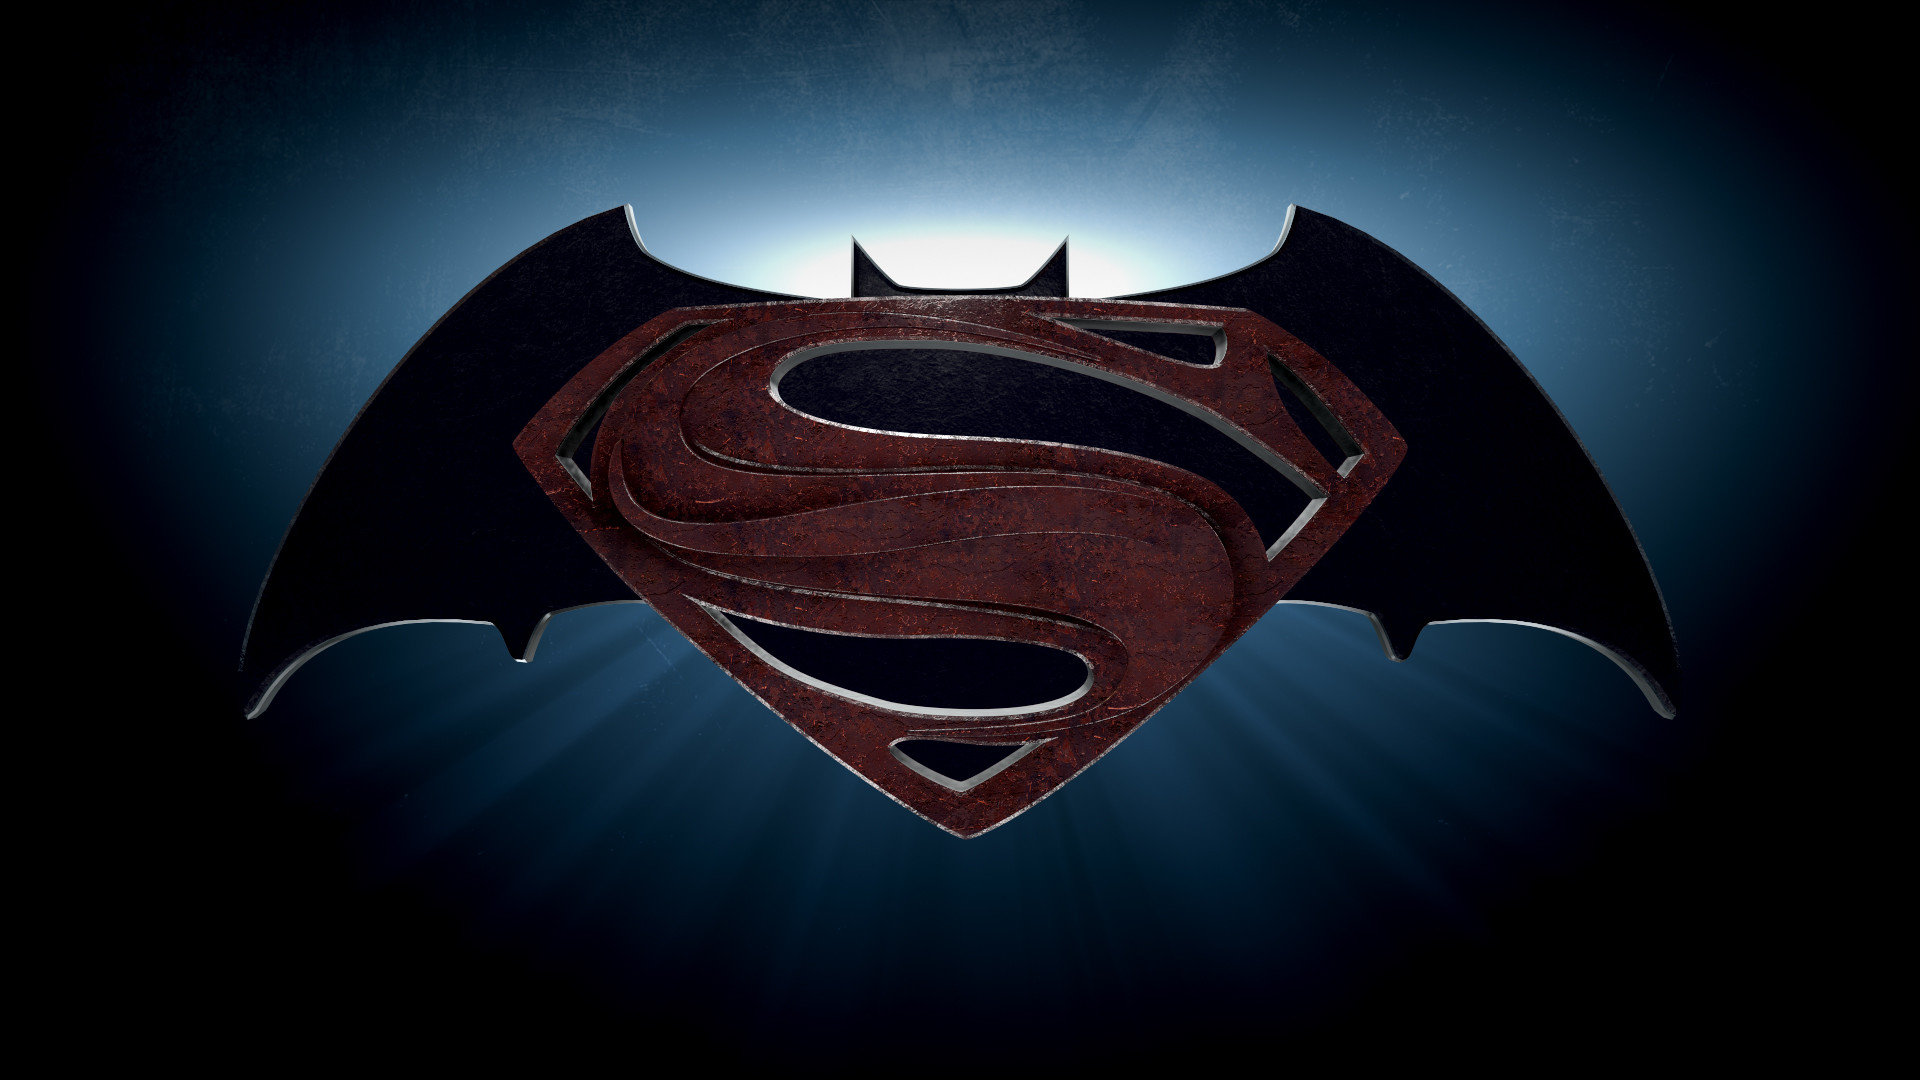 Download full hd 1920x1080 Batman V Superman: Dawn Of Justice desktop background ID:83801 for free